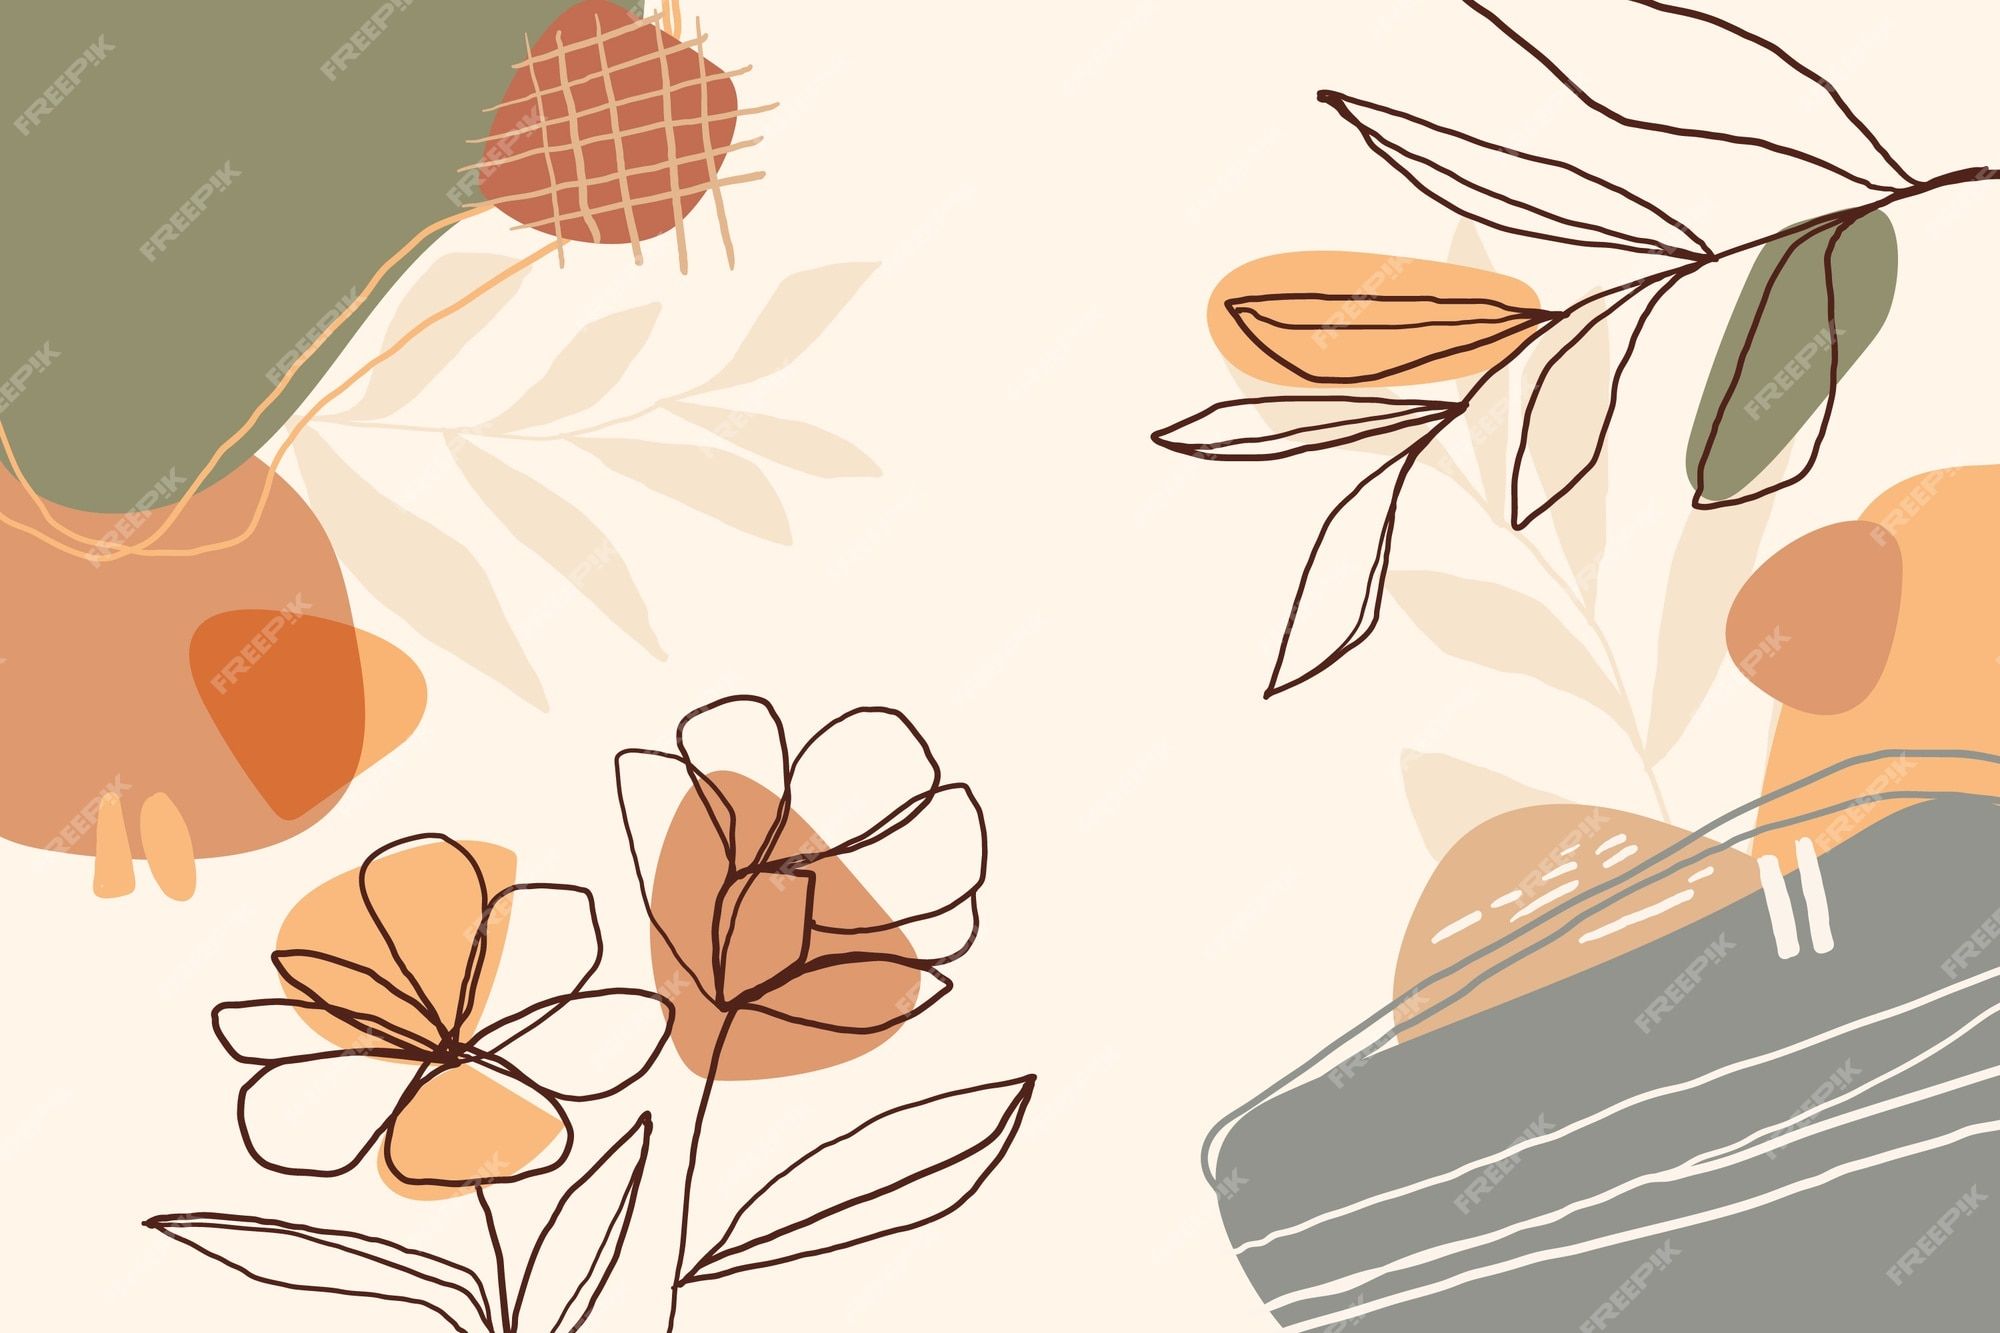 Flower aesthetic wallpaper Vectors & Illustrations for Free Download